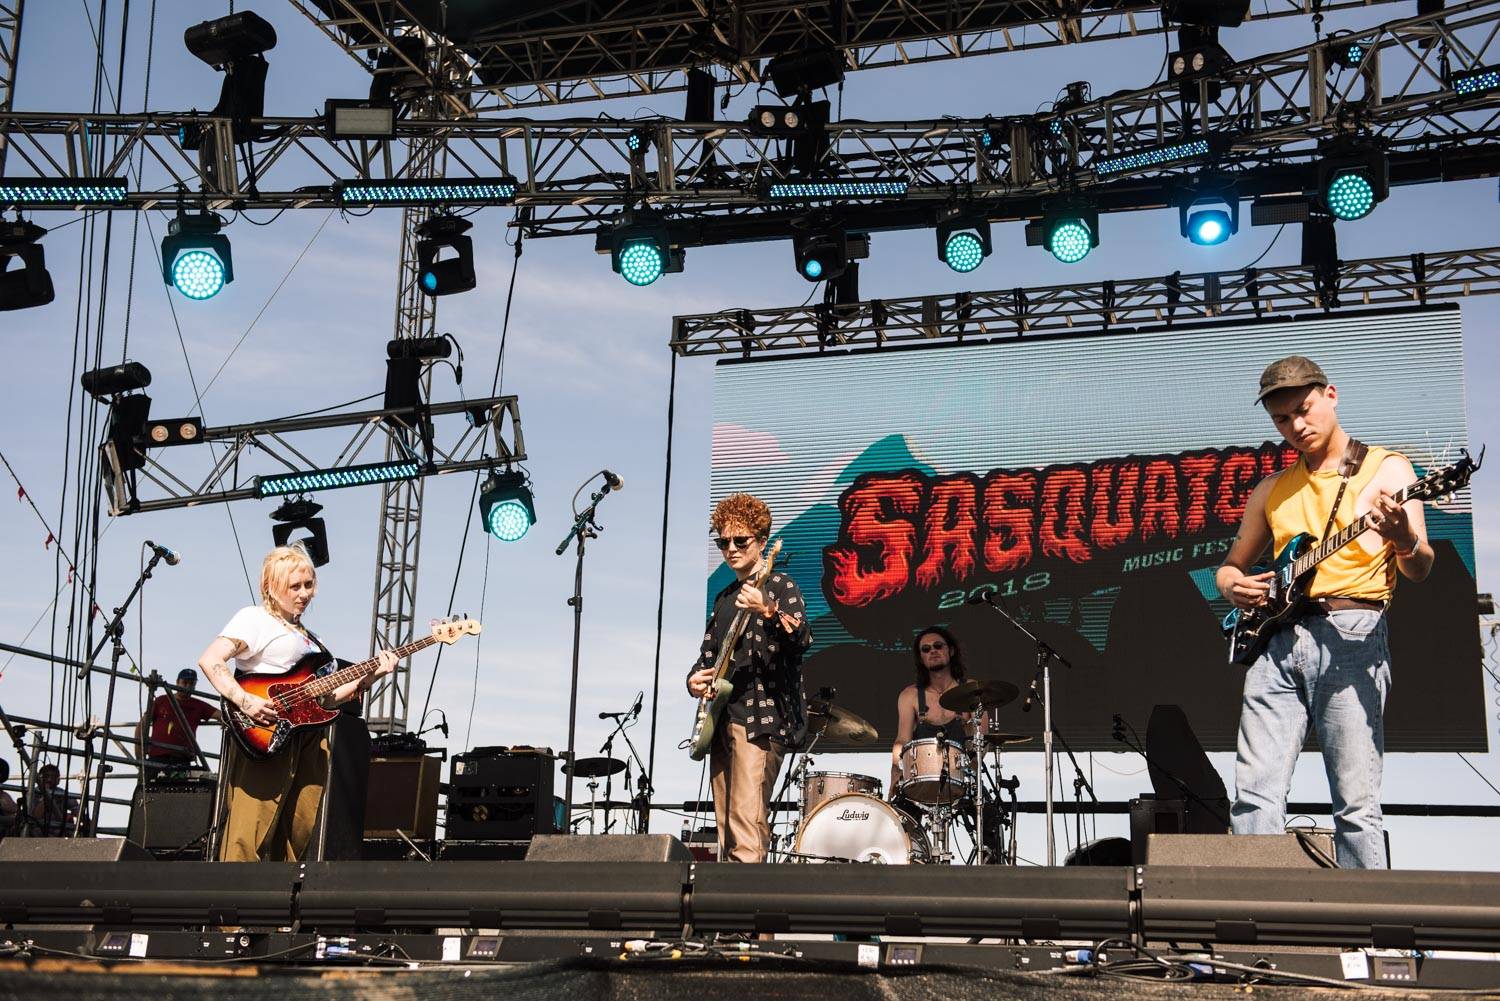 Girlpool at the Sasquatch Music Festival 2018 - Day 1, Gorge WA, May 25 2018. Pavel Boiko photo.